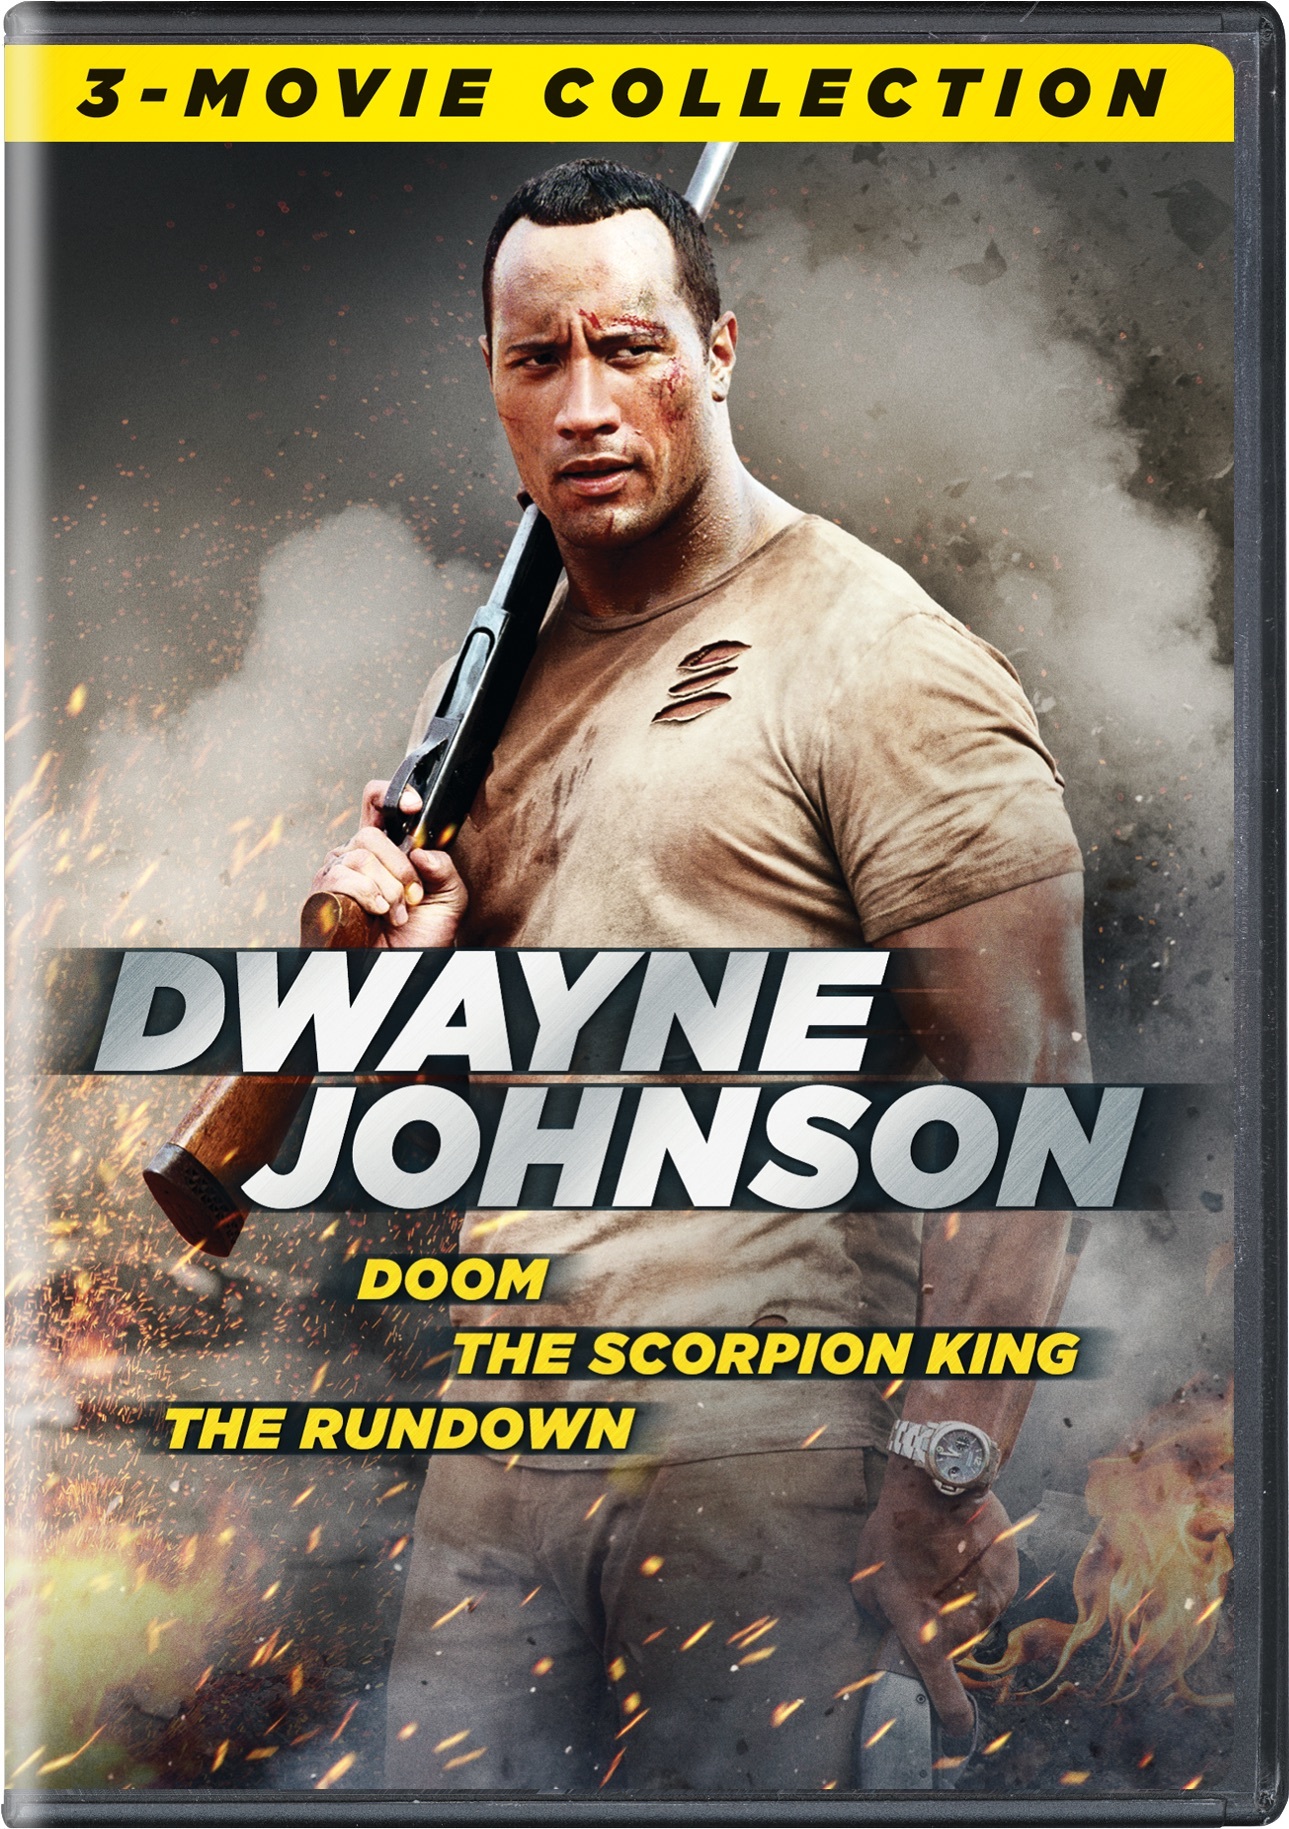 Doom/The Scorpion King/The Rundown (DVD Triple Feature) - DVD   - Drama Movies On DVD - Movies On GRUV